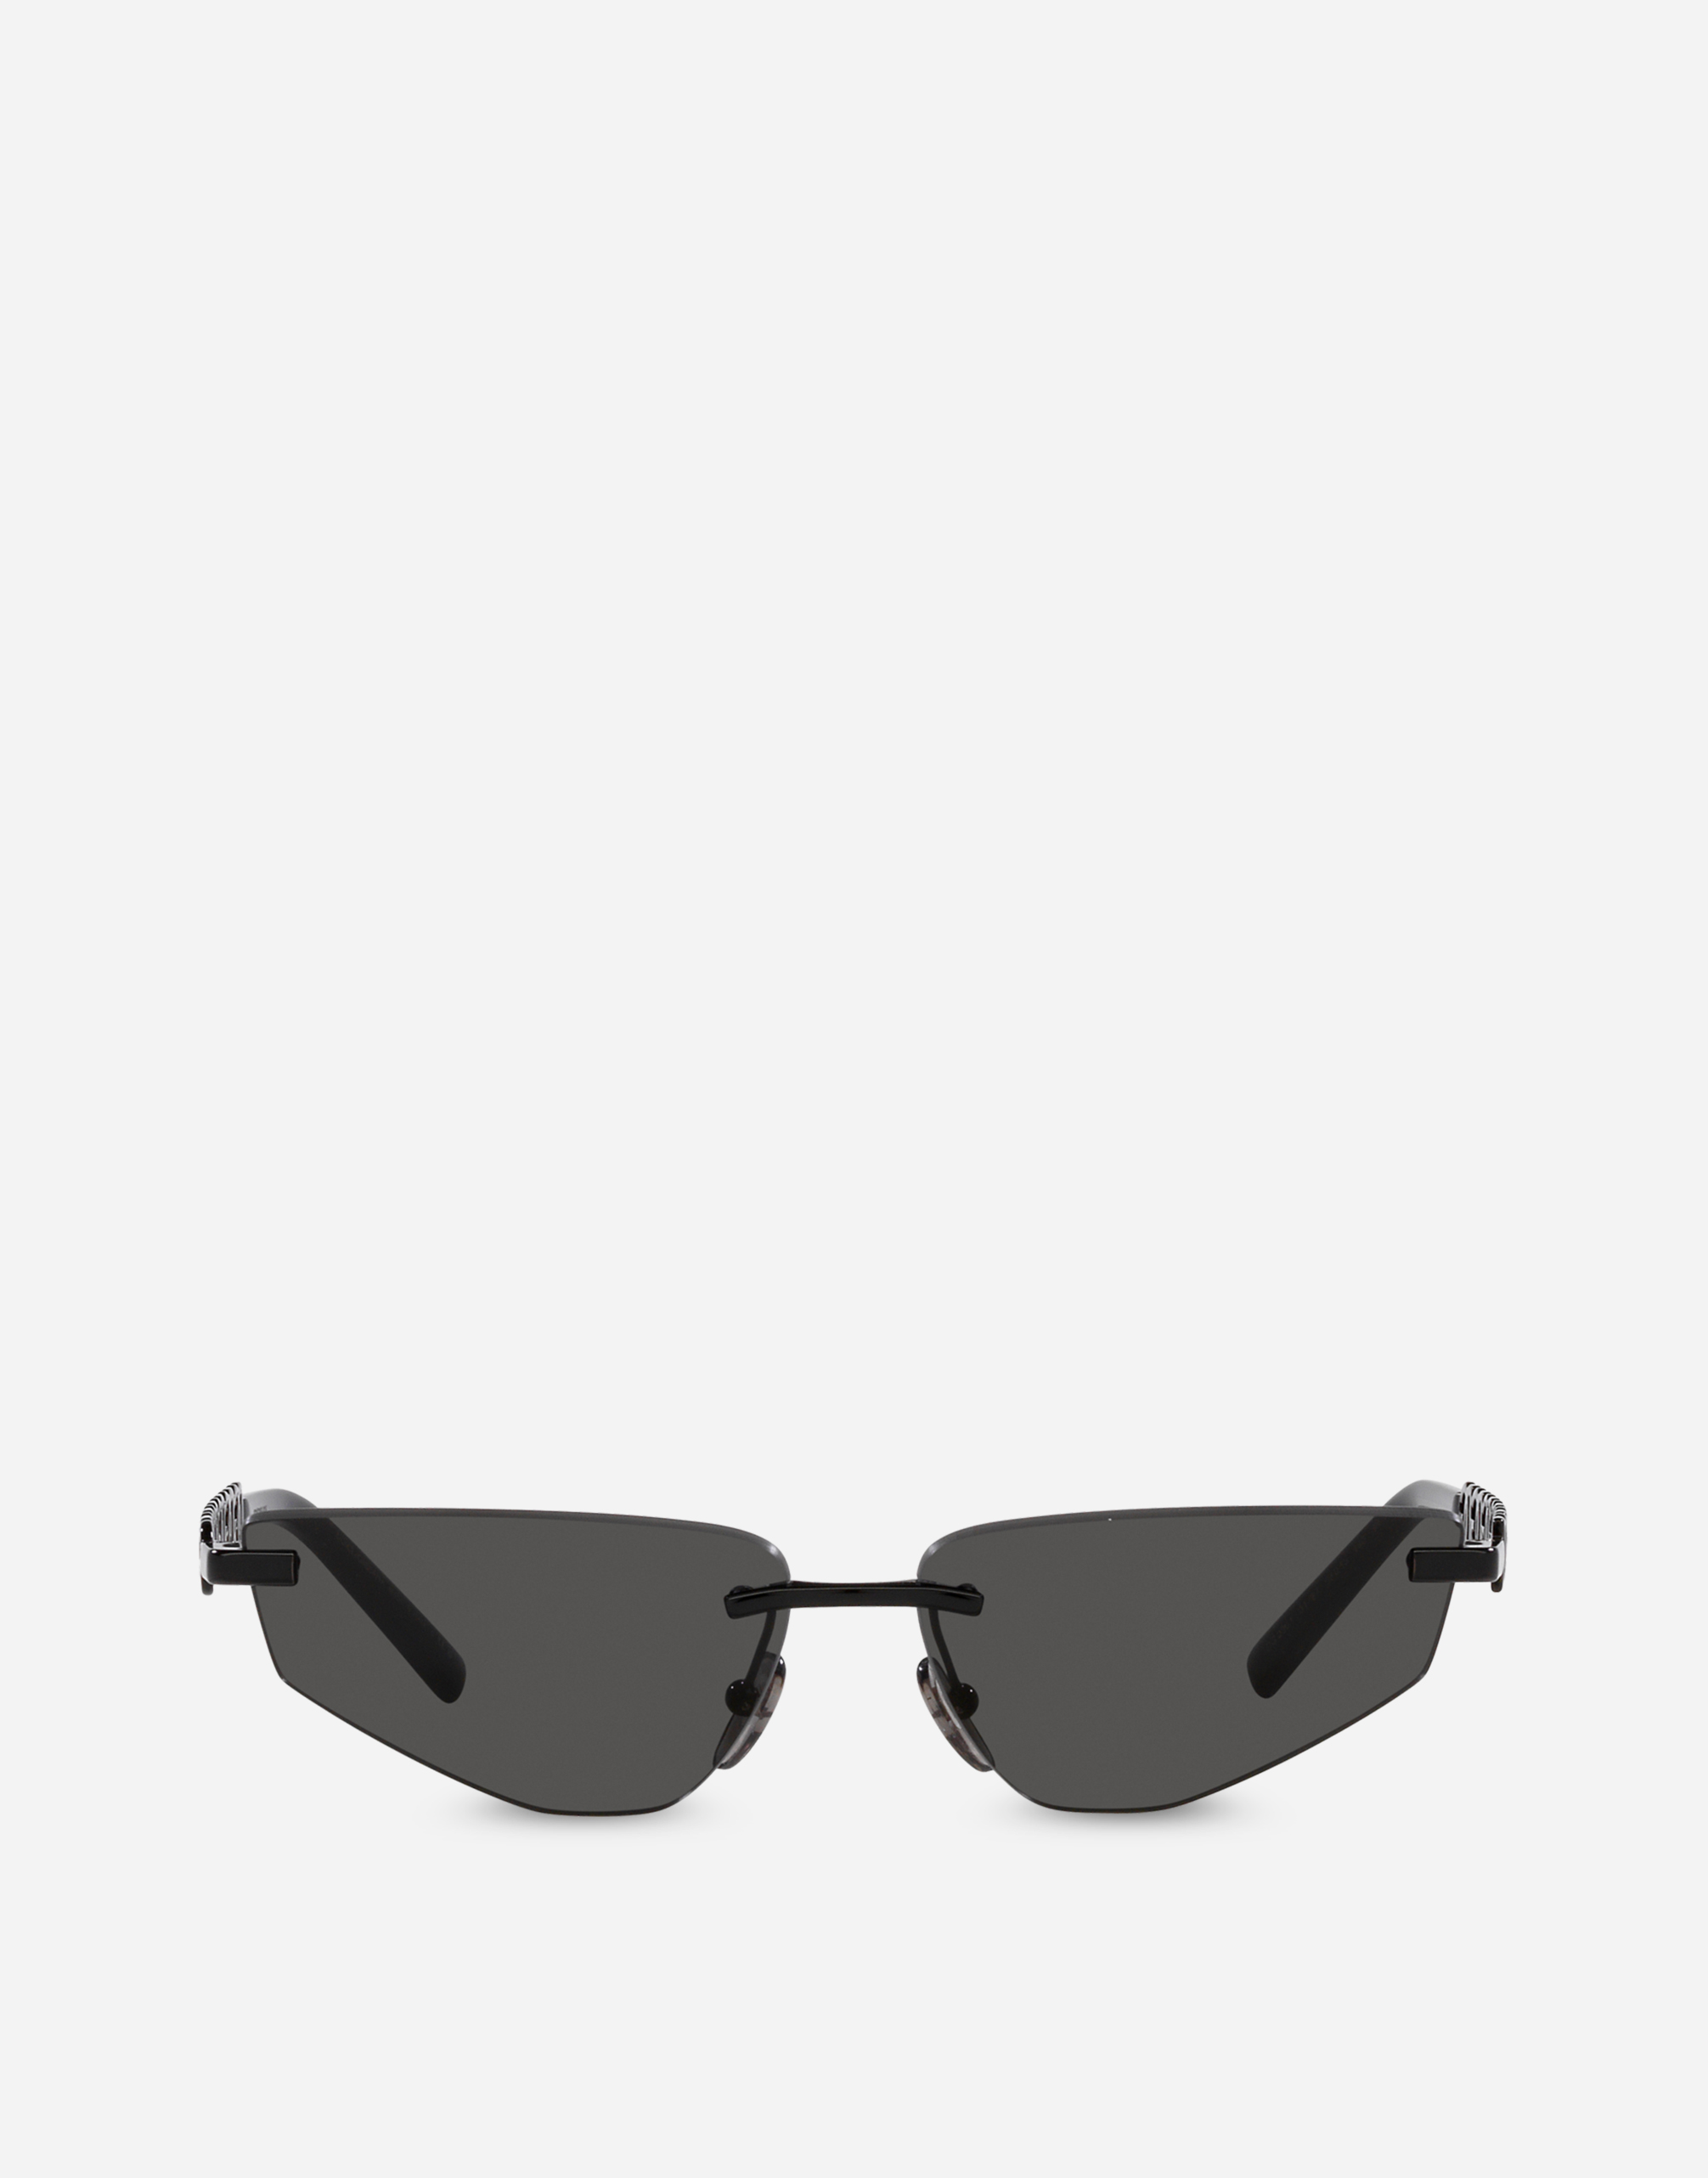 DG Essentials sunglasses in Black | Dolce&Gabbana®